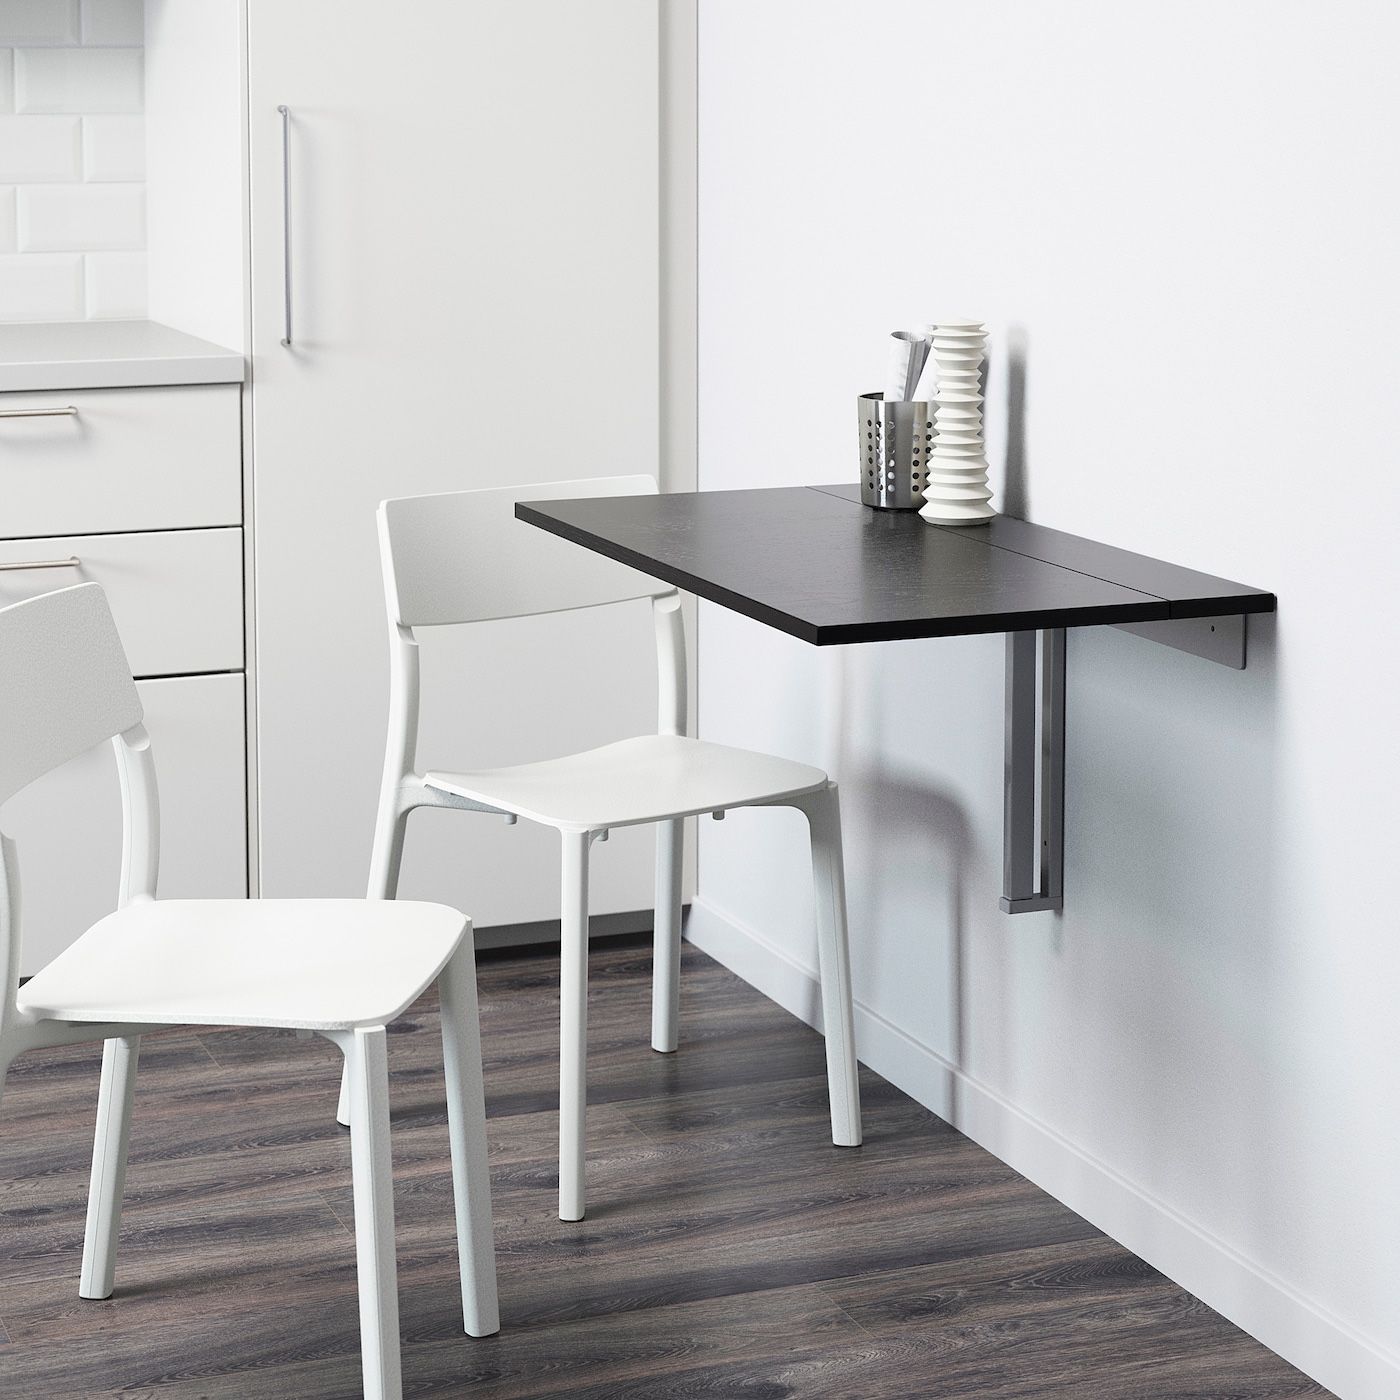 IKEA wall mounted kitchen table